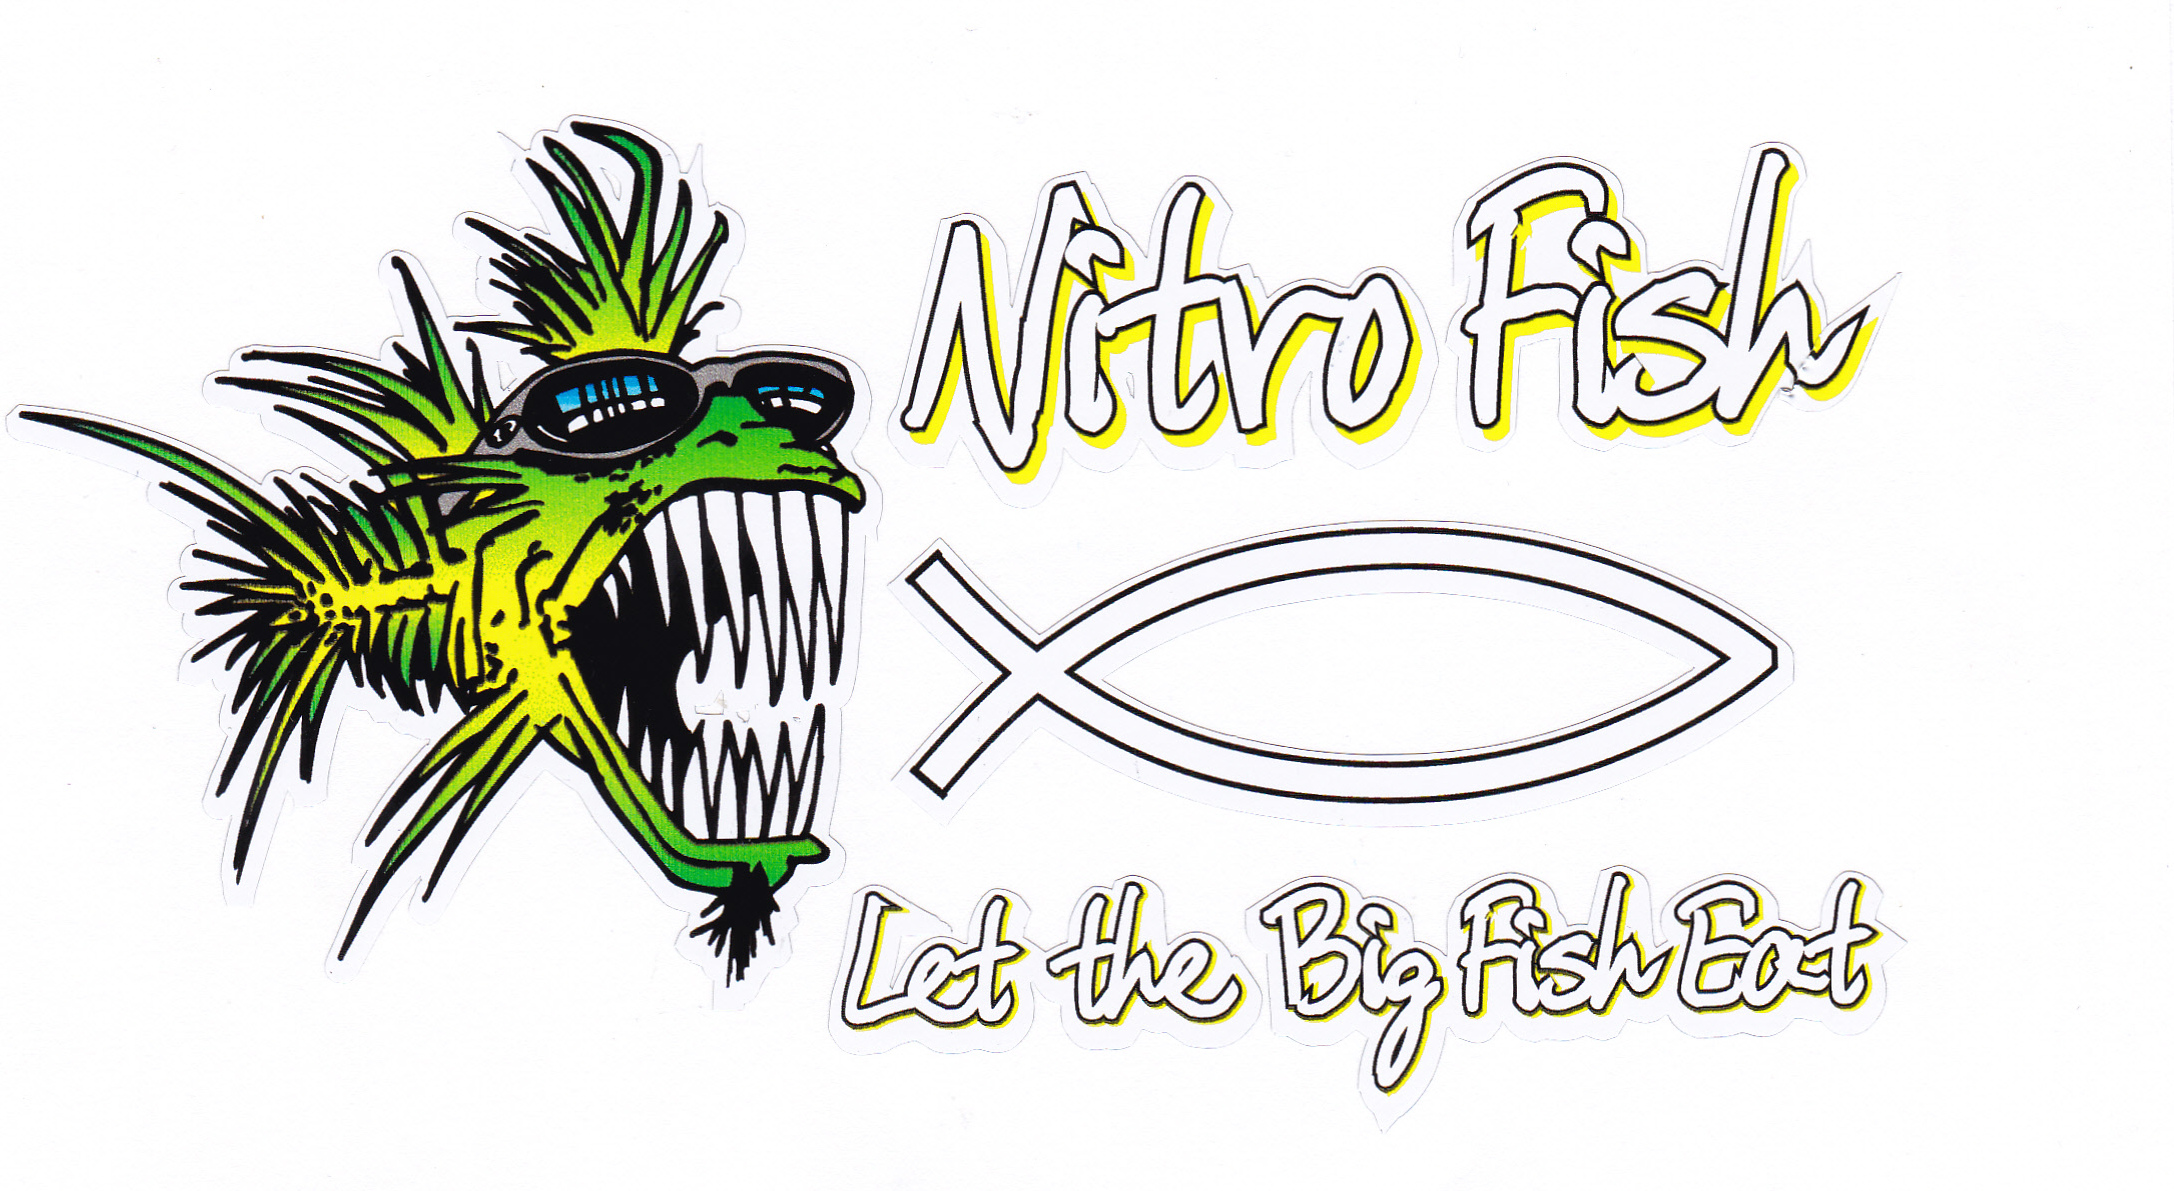 Download Nitro Fish Logos